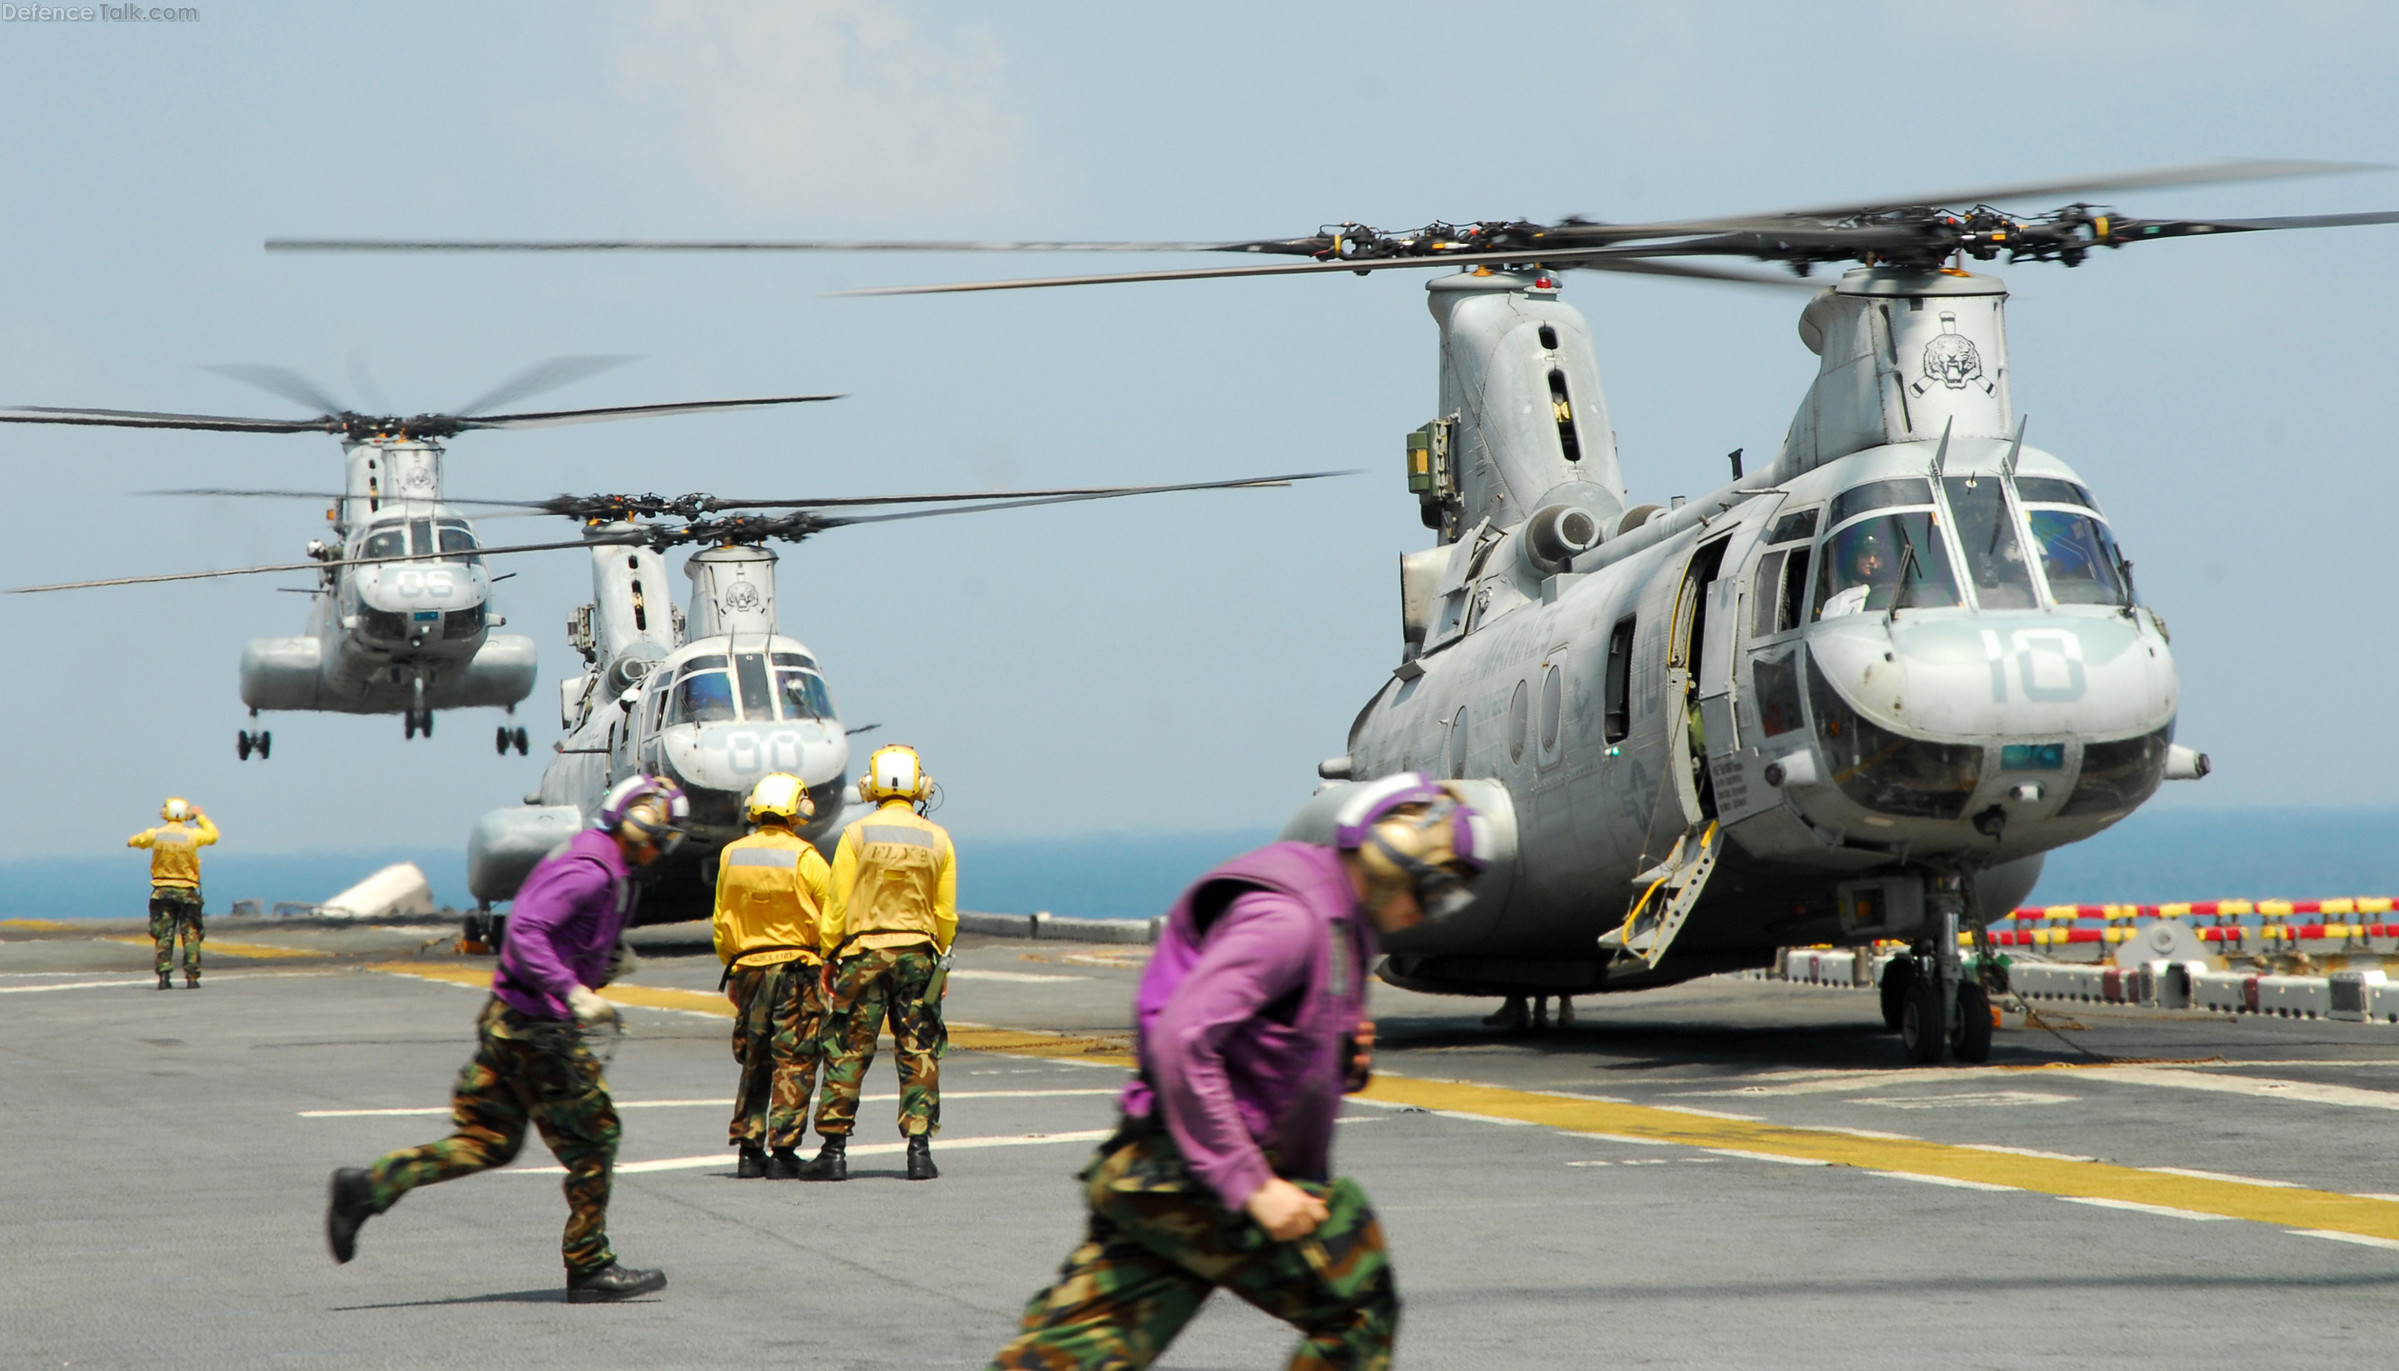 USMC CH-46E Sea Knight helicopters